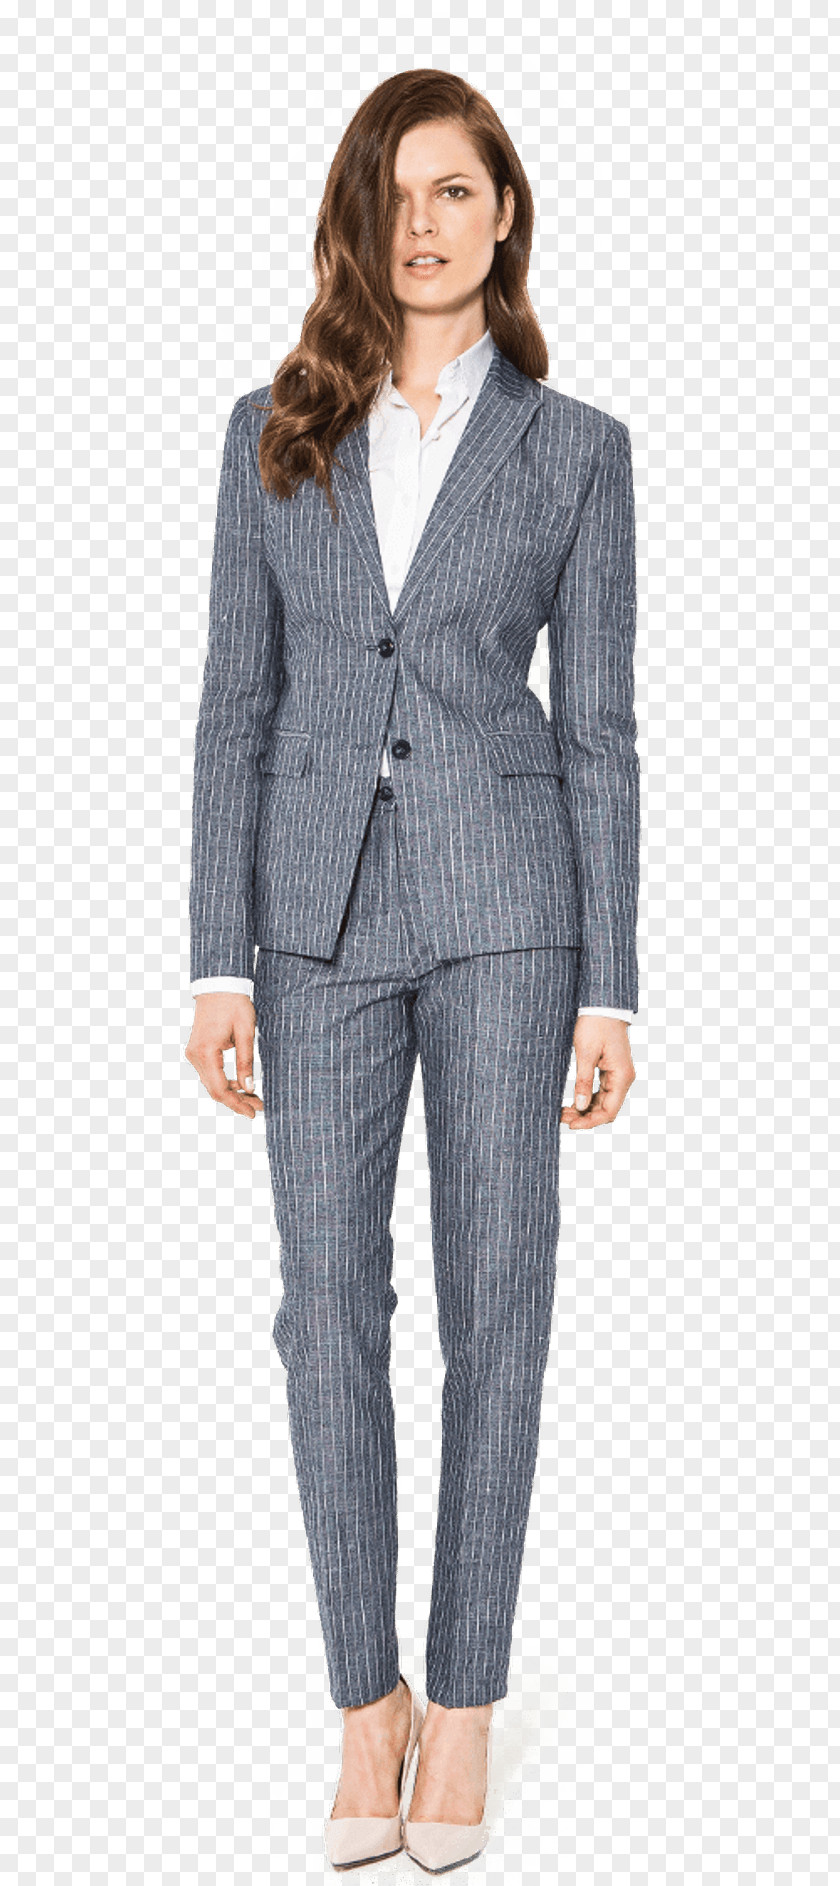 Suit For Woman Pant Suits Jakkupuku Clothing Tailor PNG